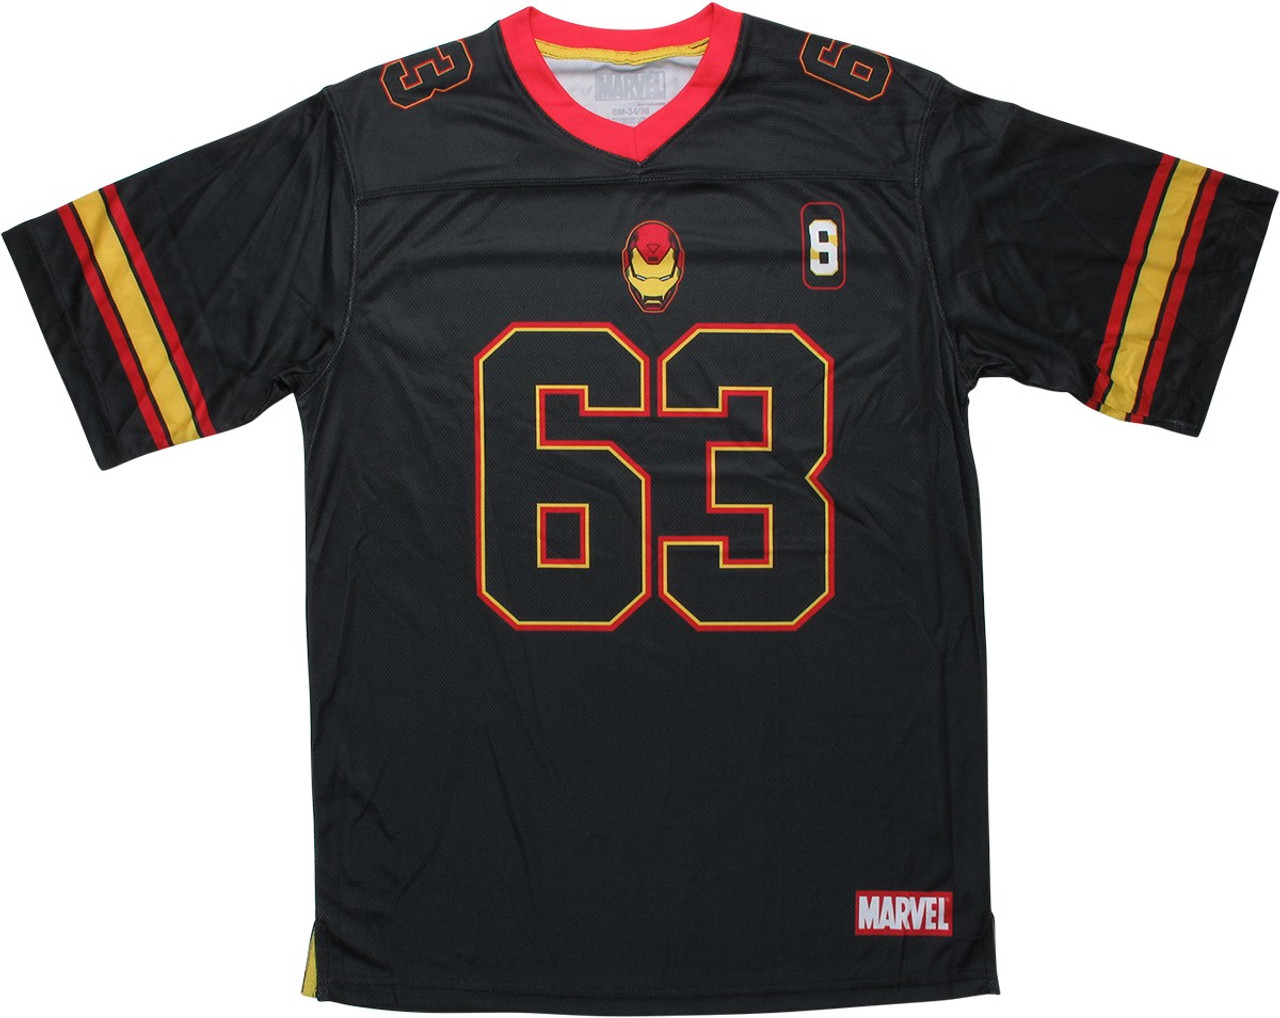 Iron Man 63 Black Football Jersey